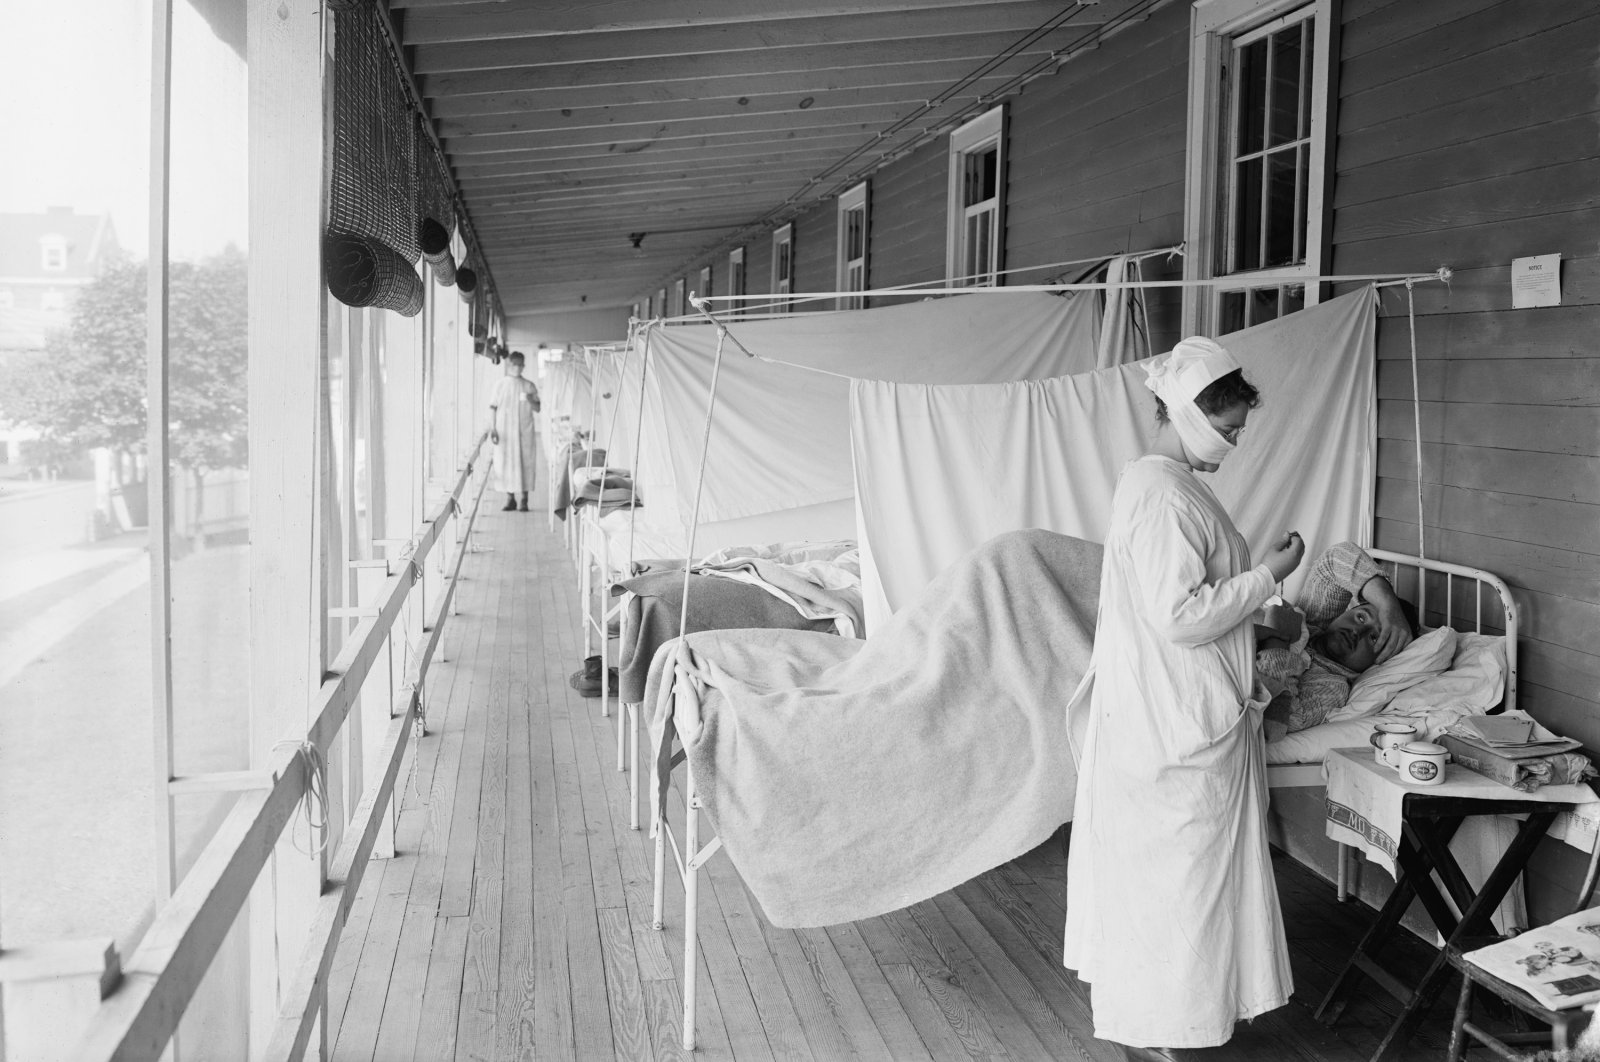 Walter Reed Hospital flu ward during the Spanish Flu epidemic of 1918-19, in Washington D.C., U.S. (Shutterstock Photo)